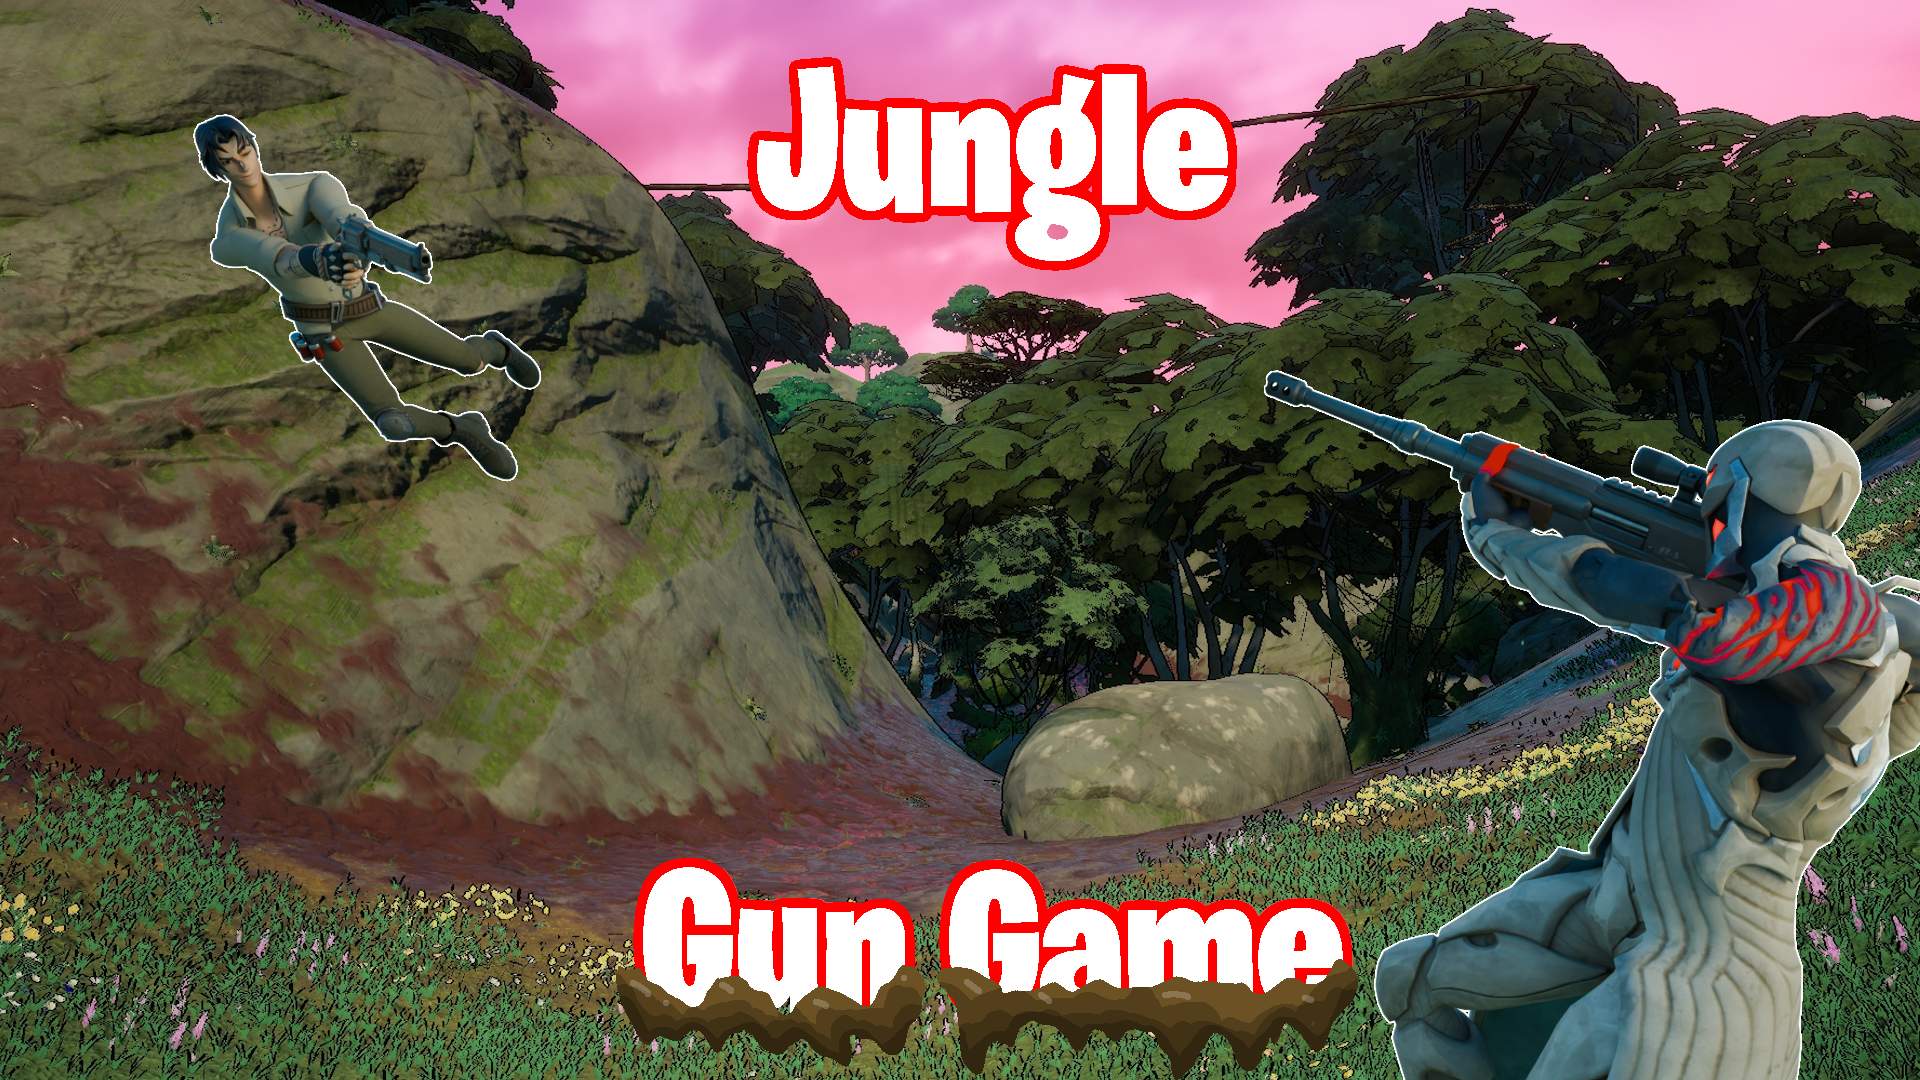 Jungle - Gun Game